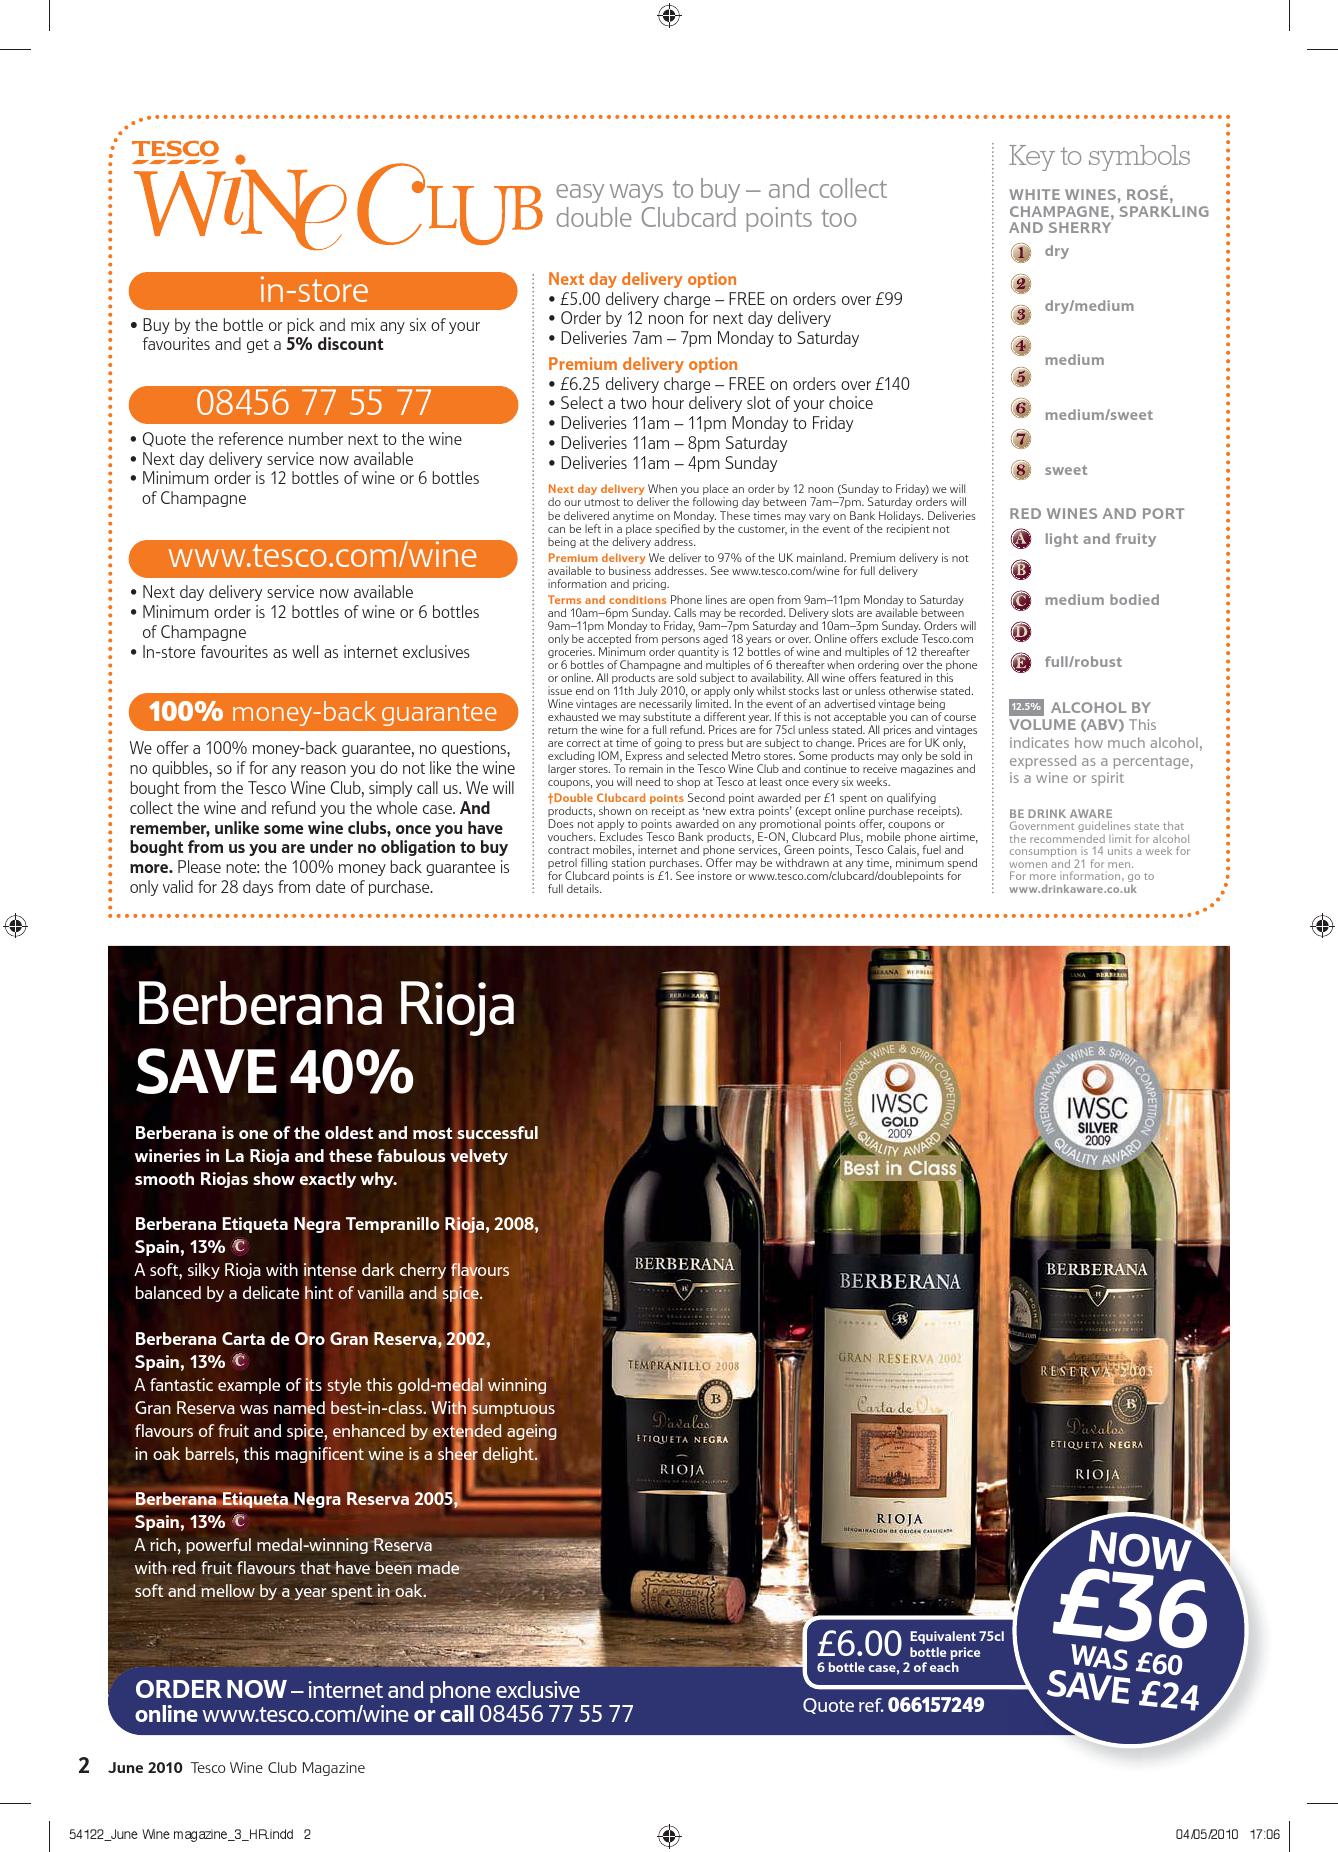 Wine magazine_LR proof_FINAL_ 07.05.10_000002.jpg